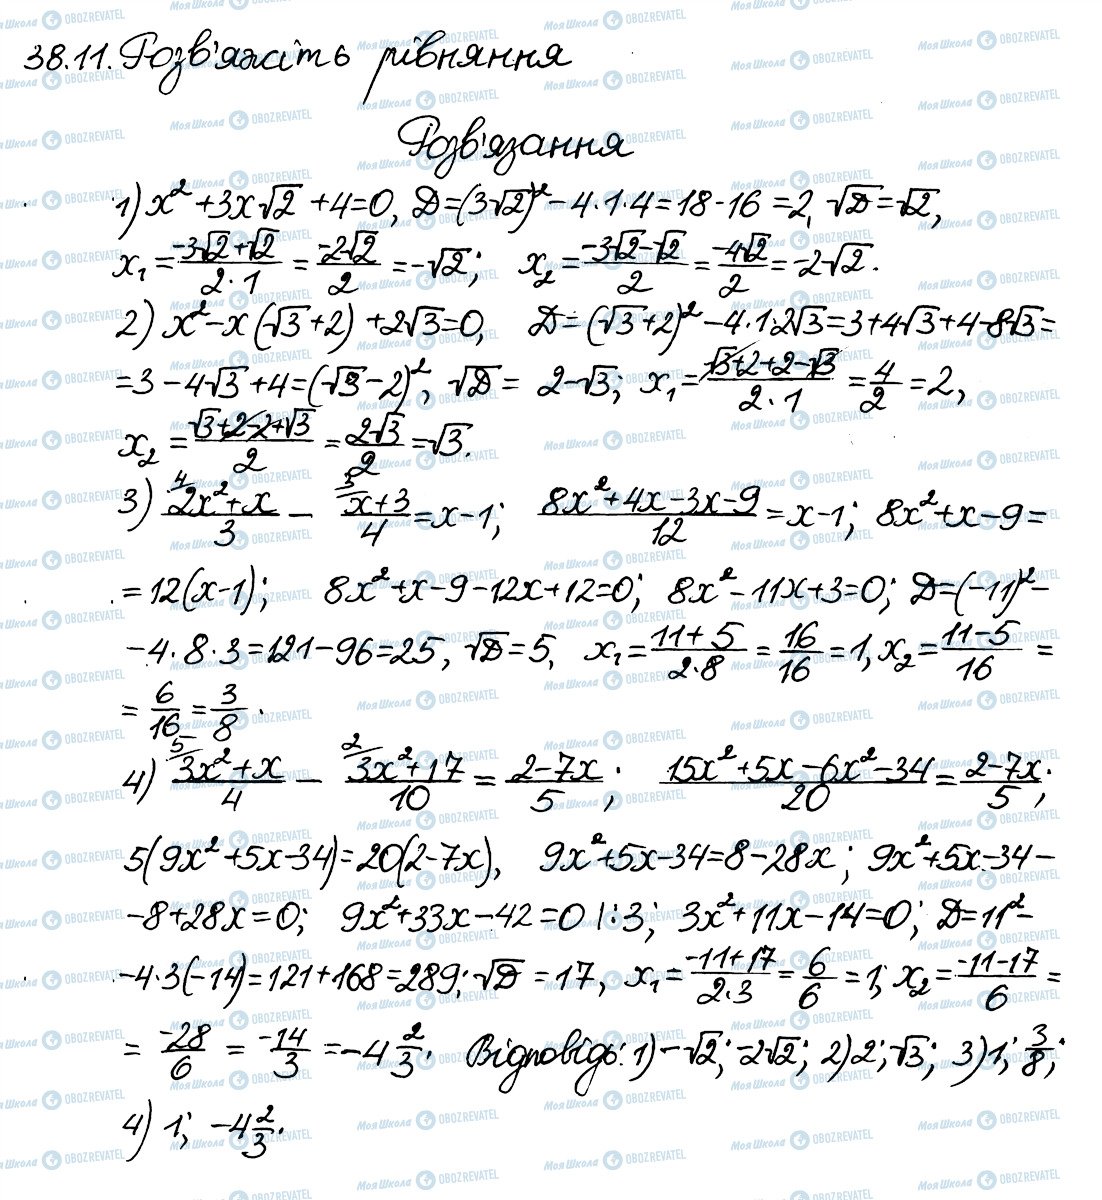 ГДЗ Алгебра 8 клас сторінка 11